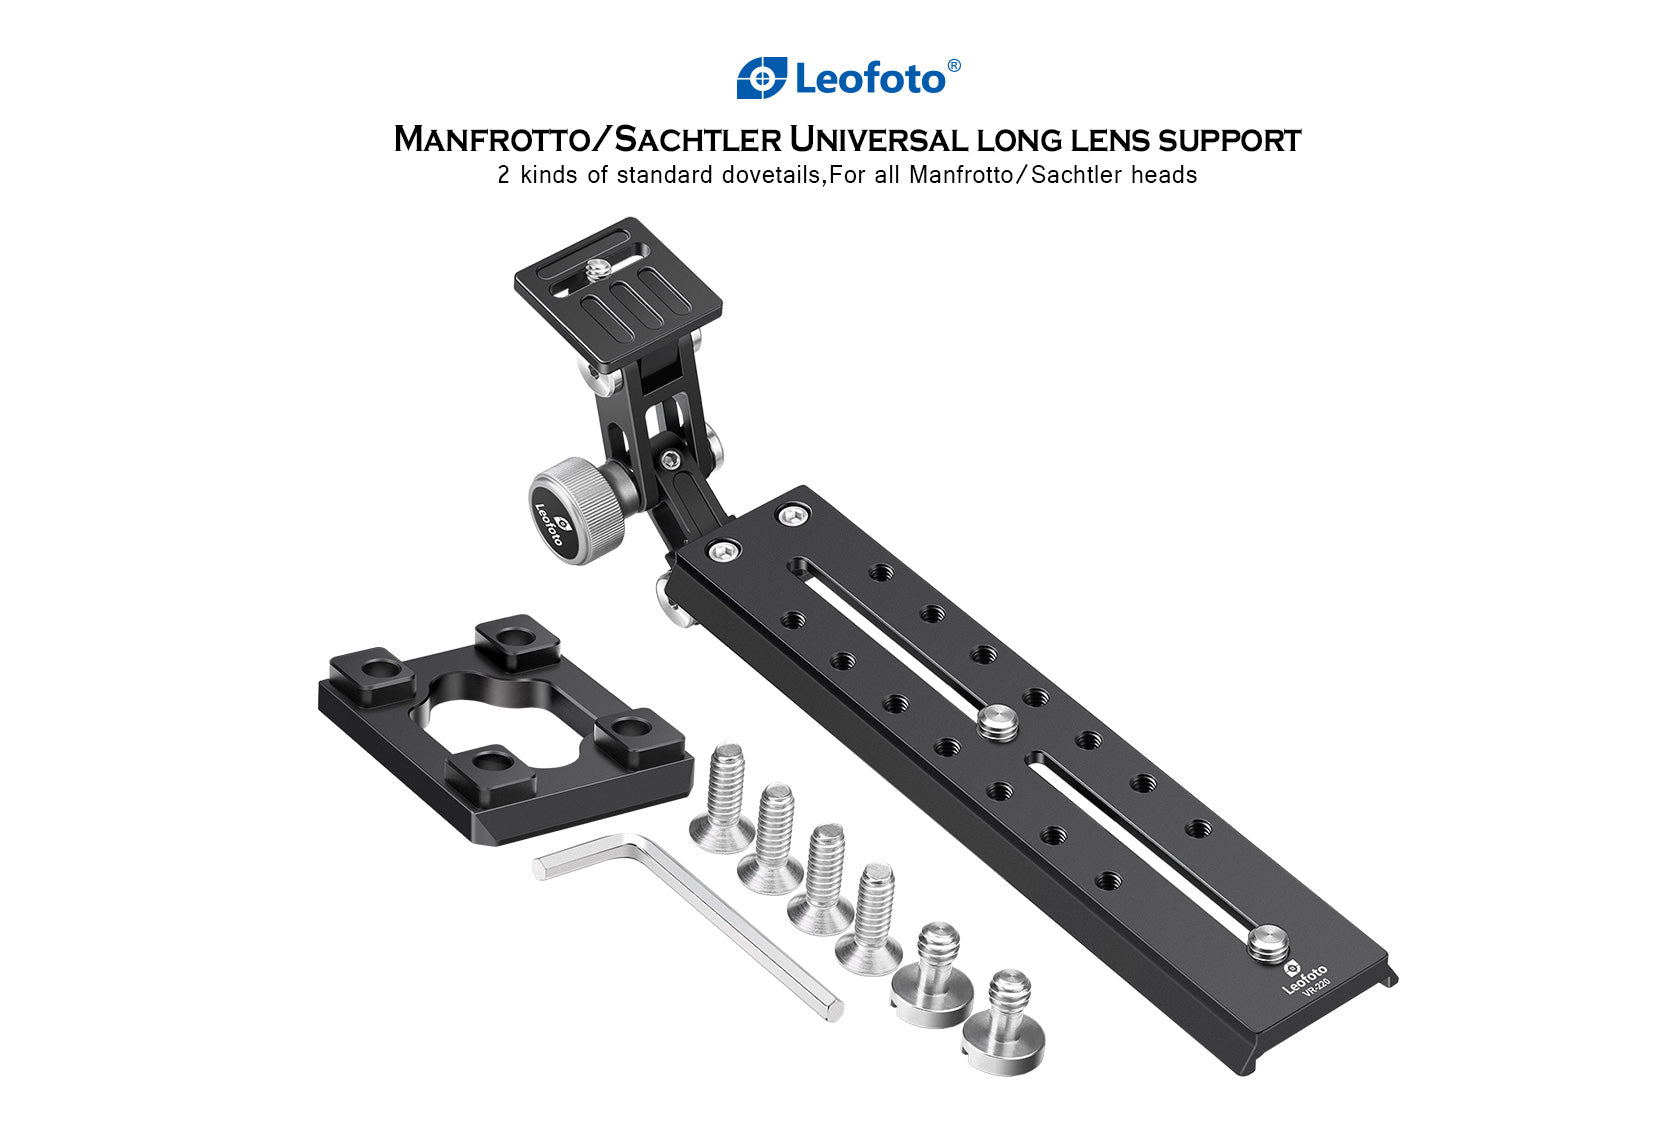 Leofoto VR-220 / VR-380 Long Lens Support for Manfrotto/ Sachtler Tripod Head